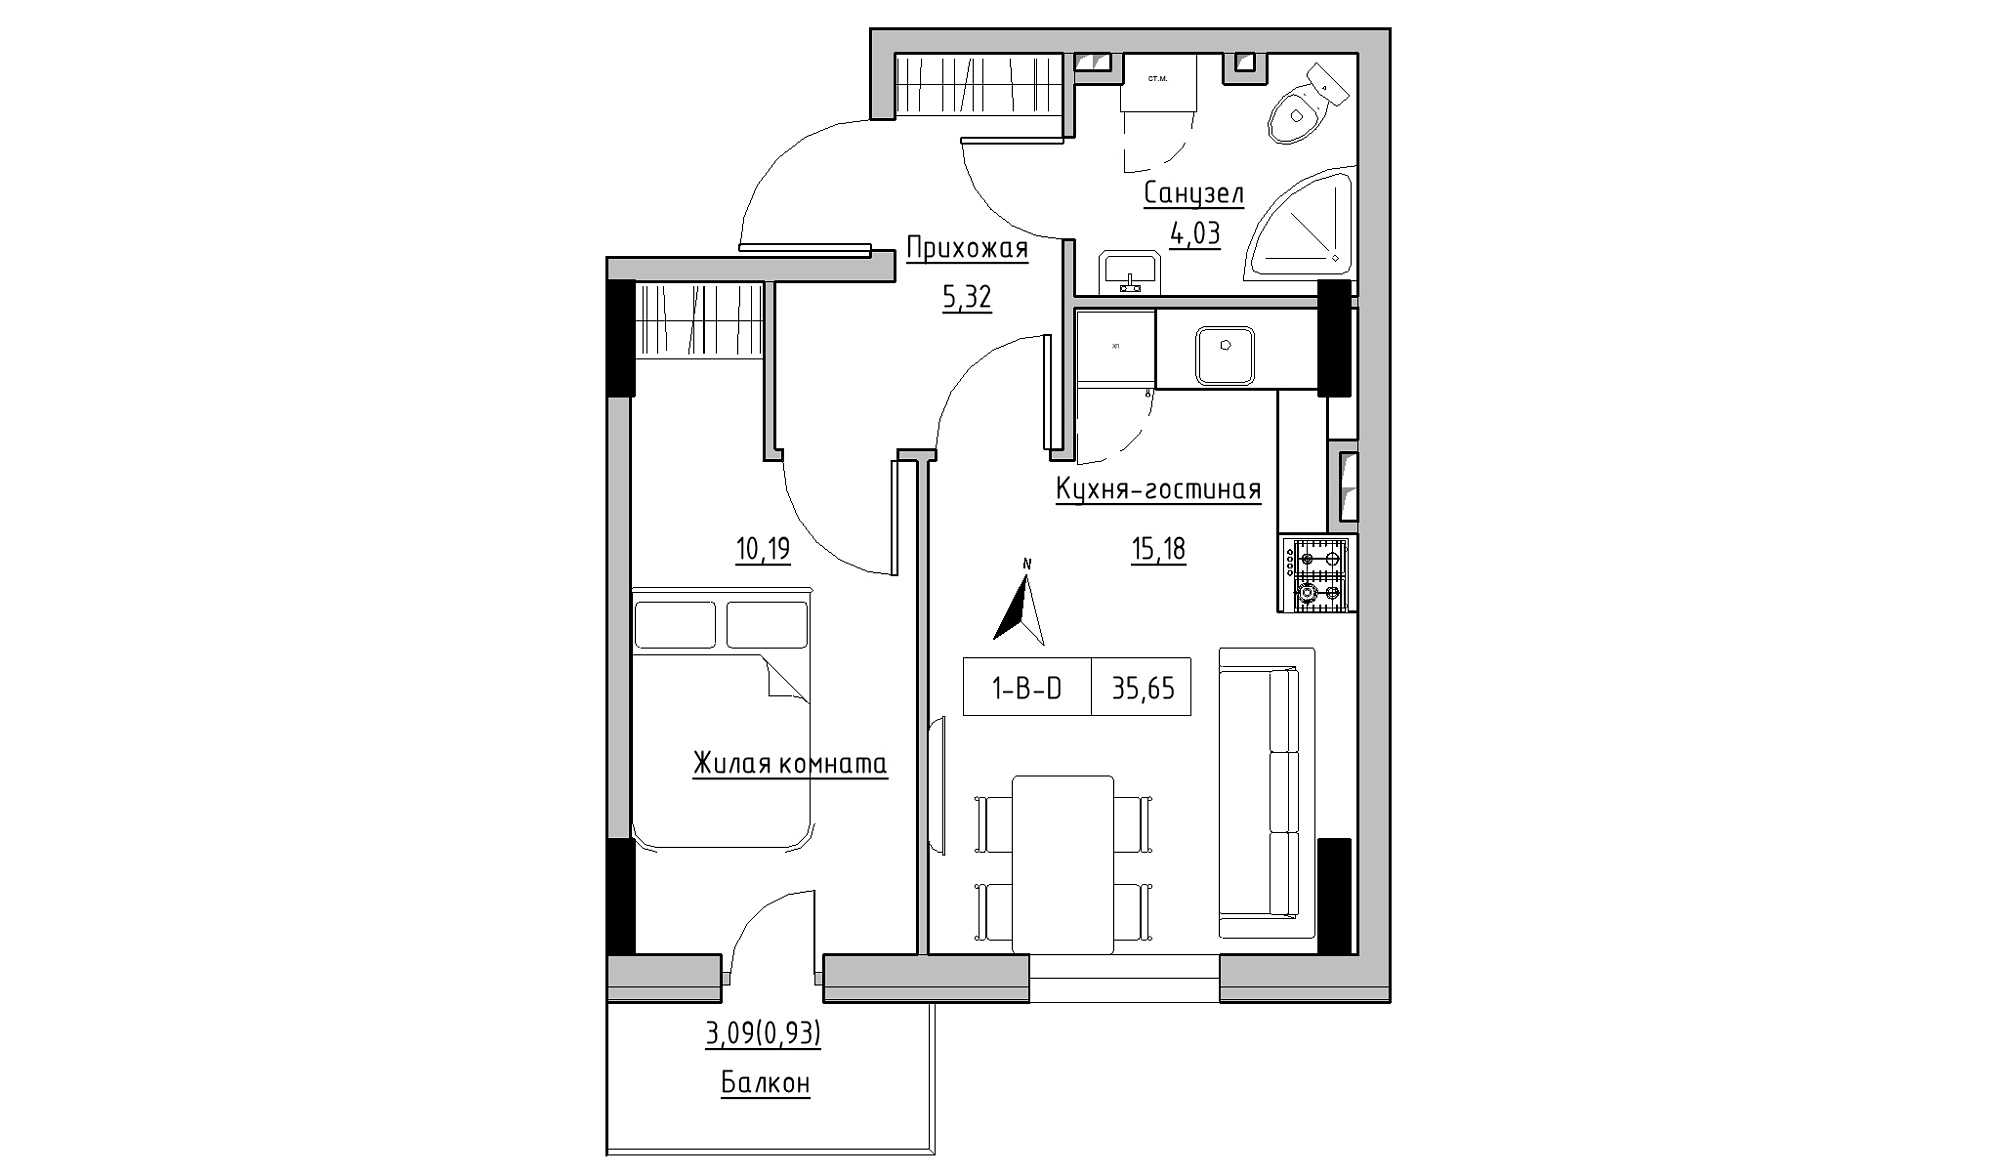 Planning 1-rm flats area 35.65m2, KS-025-02/0011.